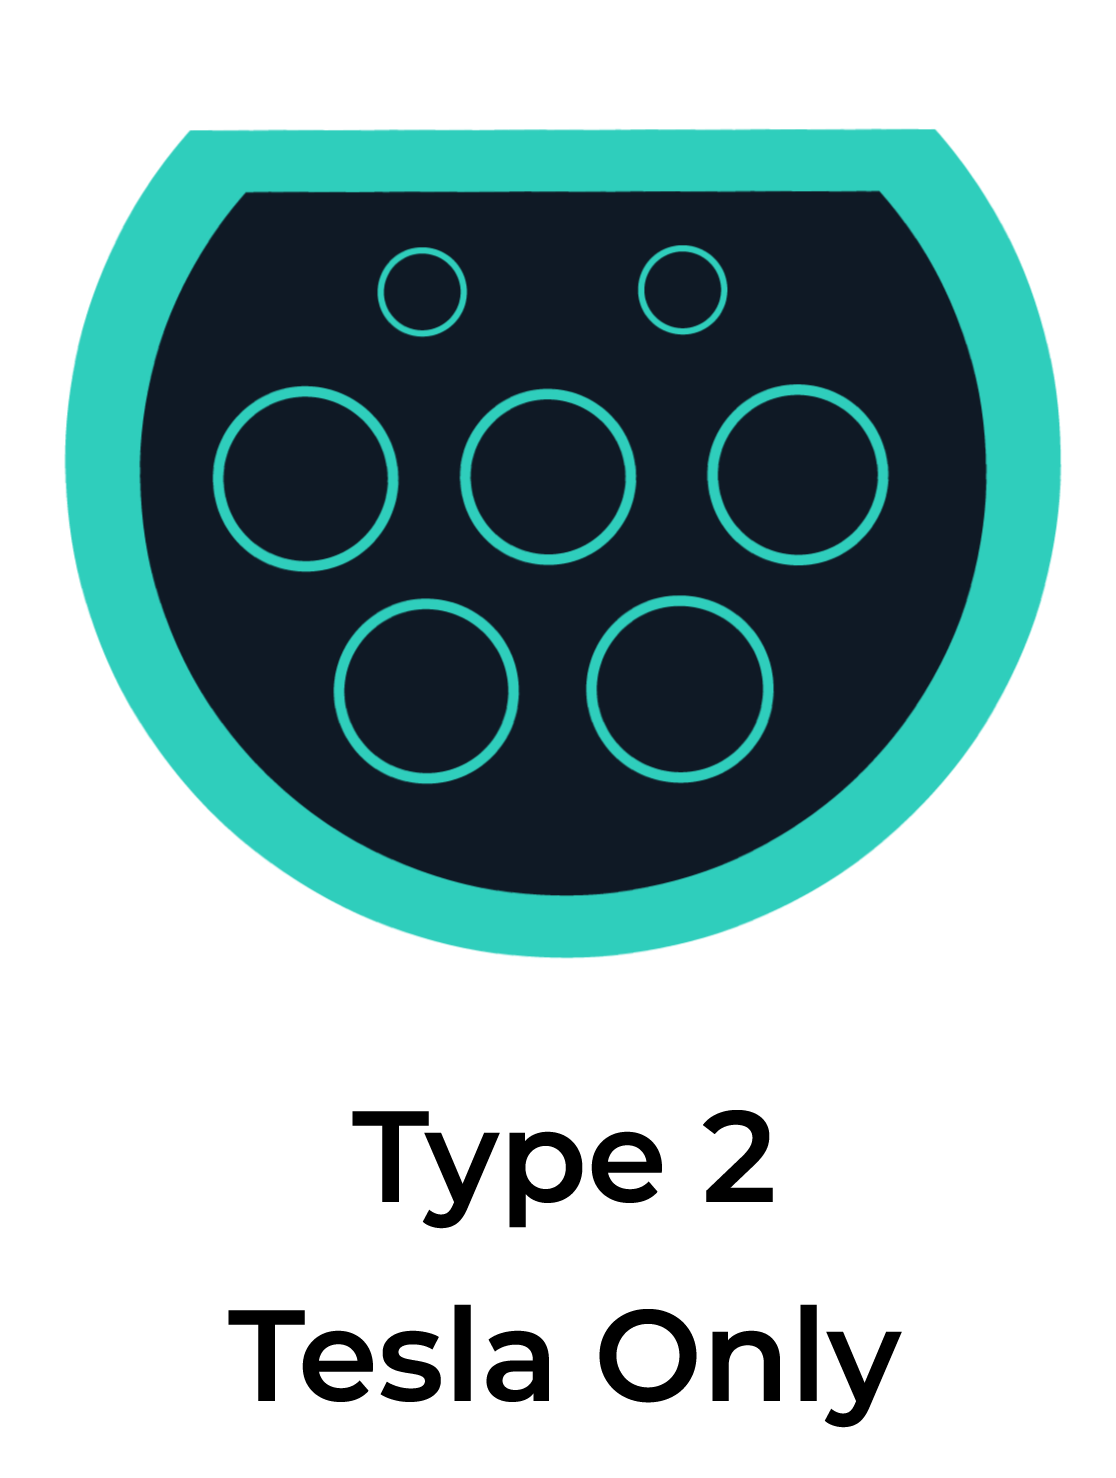 Icon, circle

Description automatically generated